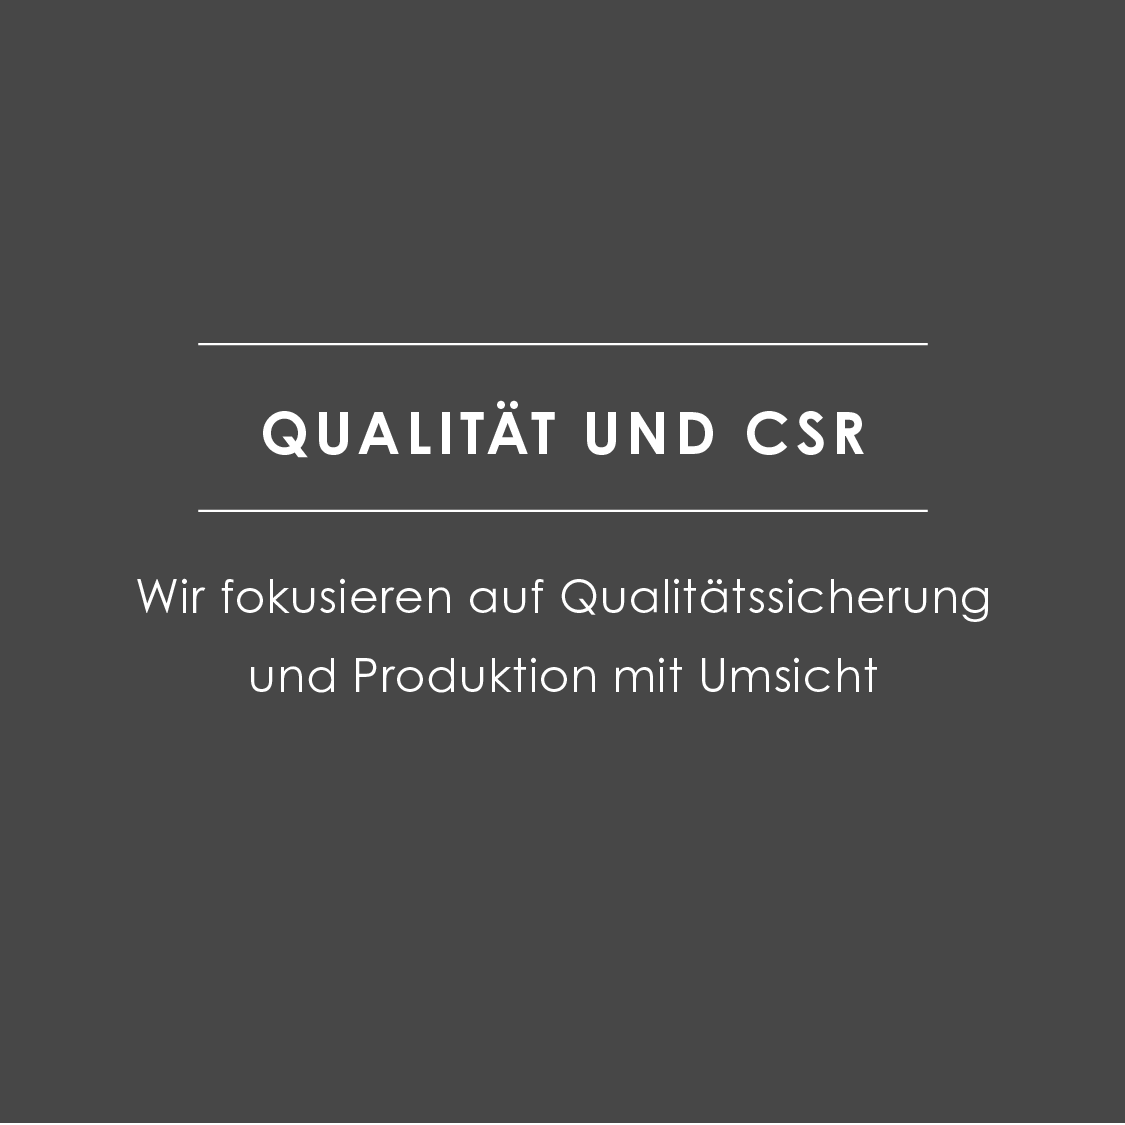 Kvalitet og CSR